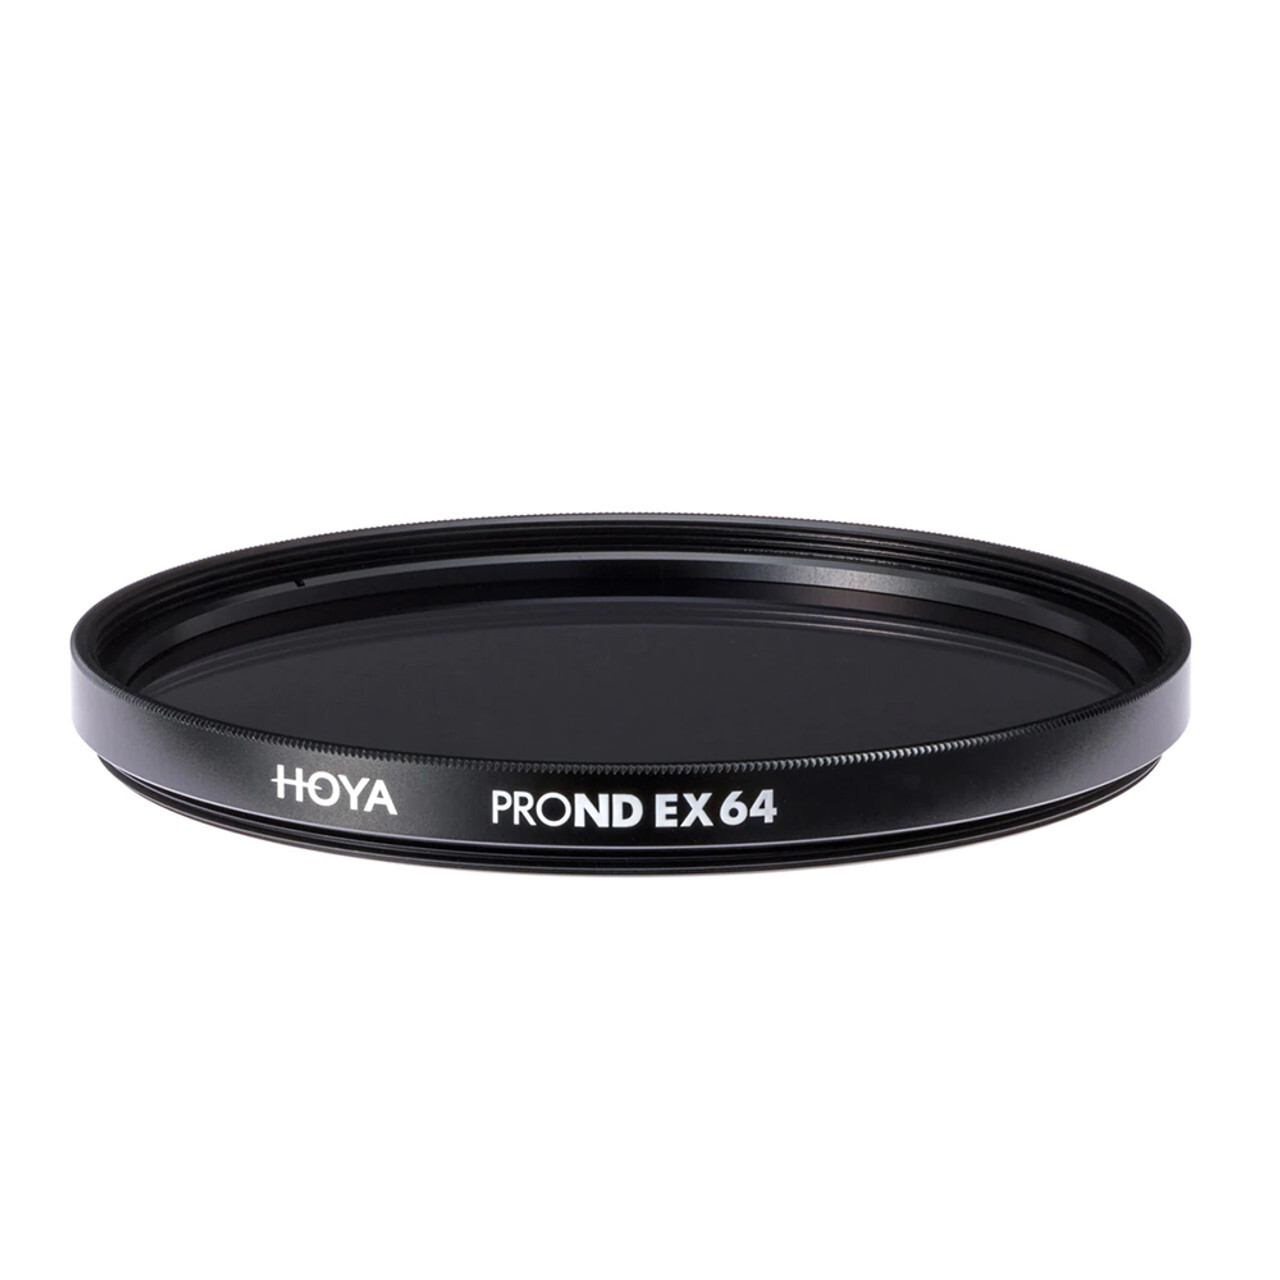 HOYA PROND EX 64